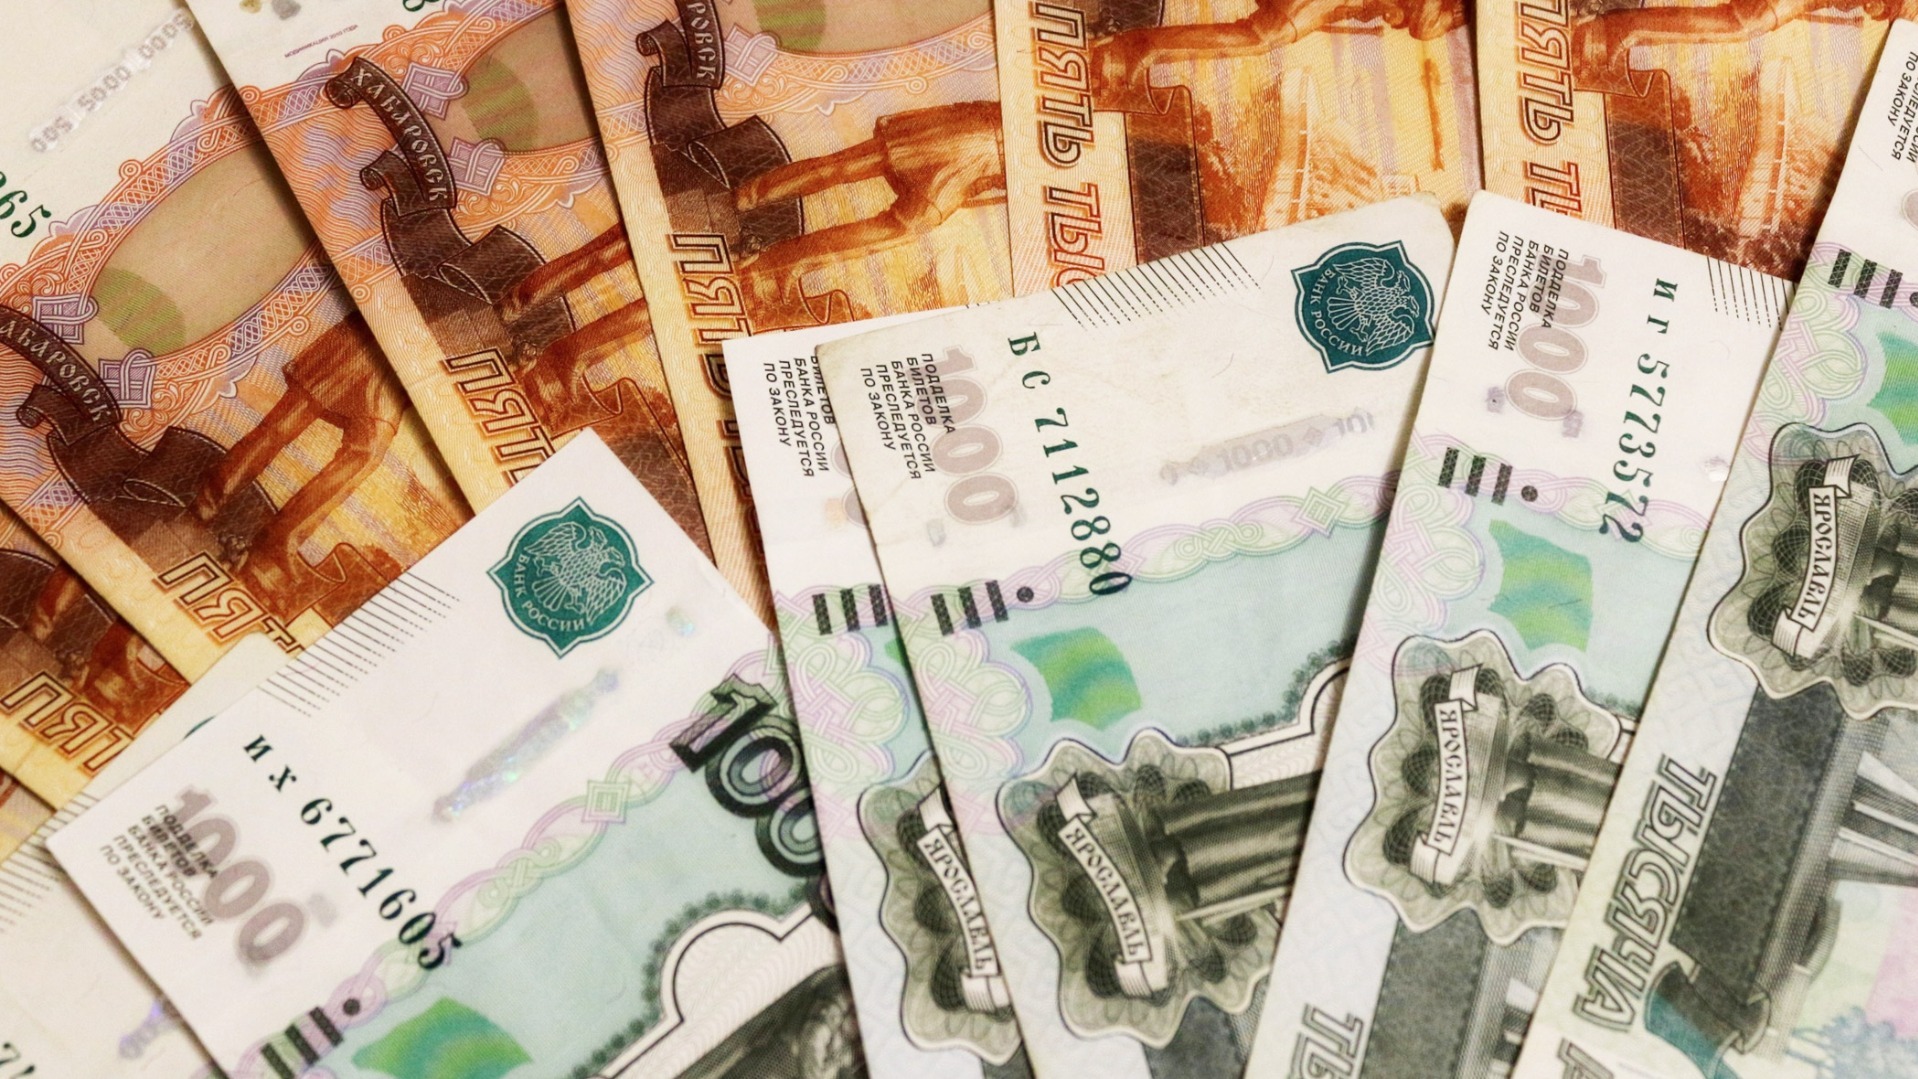 Омское охранное предприятие заподозрили в уклонении от налогов на 39 млн рублей